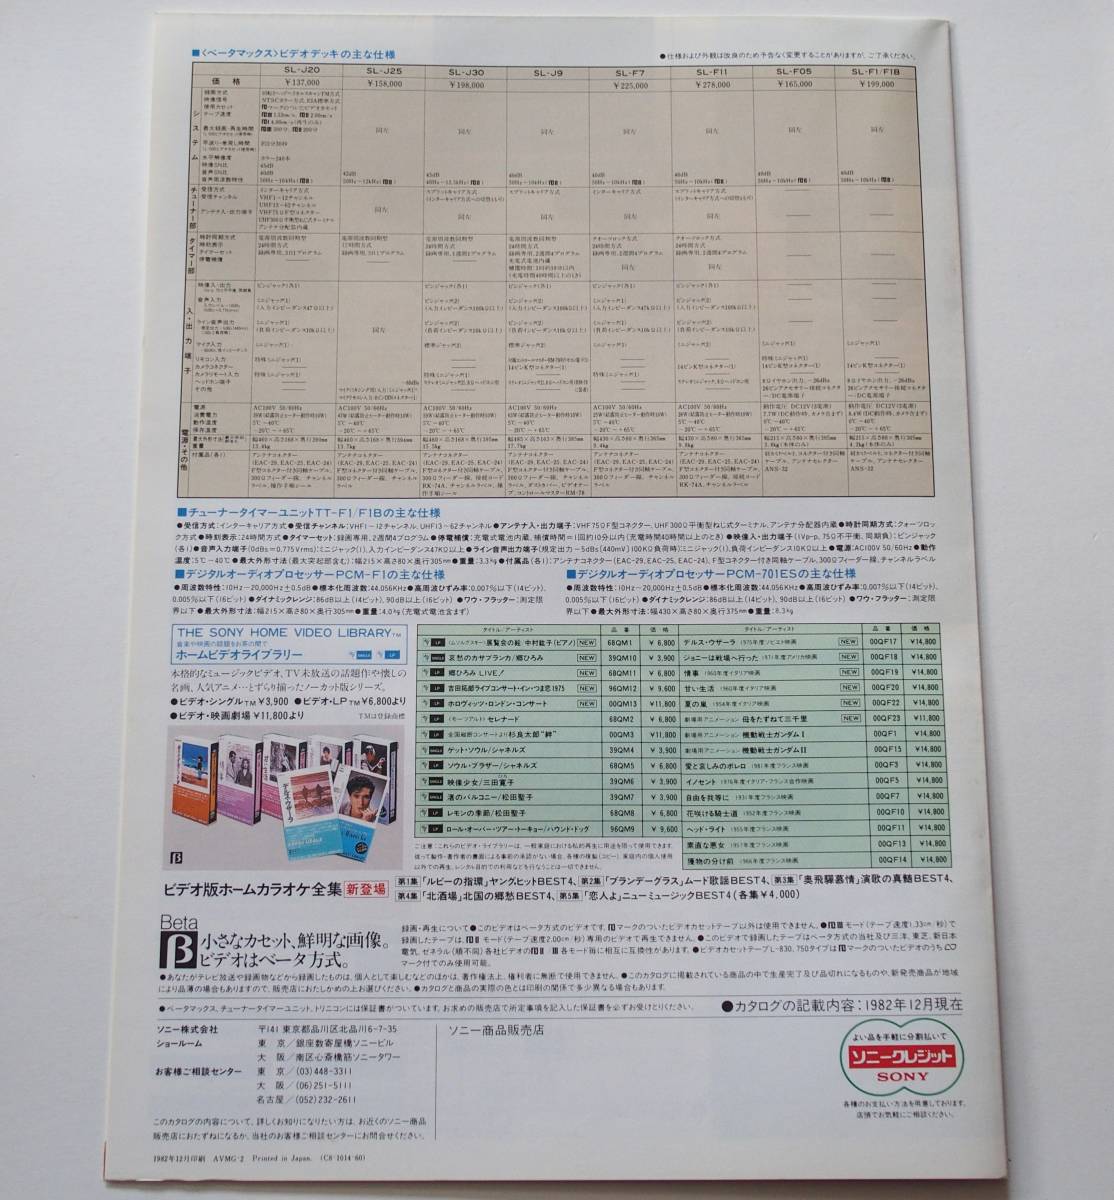 [ каталог ][SONY Beta Max объединенный каталог ]1982 год ( Showa 57 год )12 месяц SL-J20/SL-J25/SL-J30/SL-J9/SL-F7/SL-F11/SL-F05 размещение 